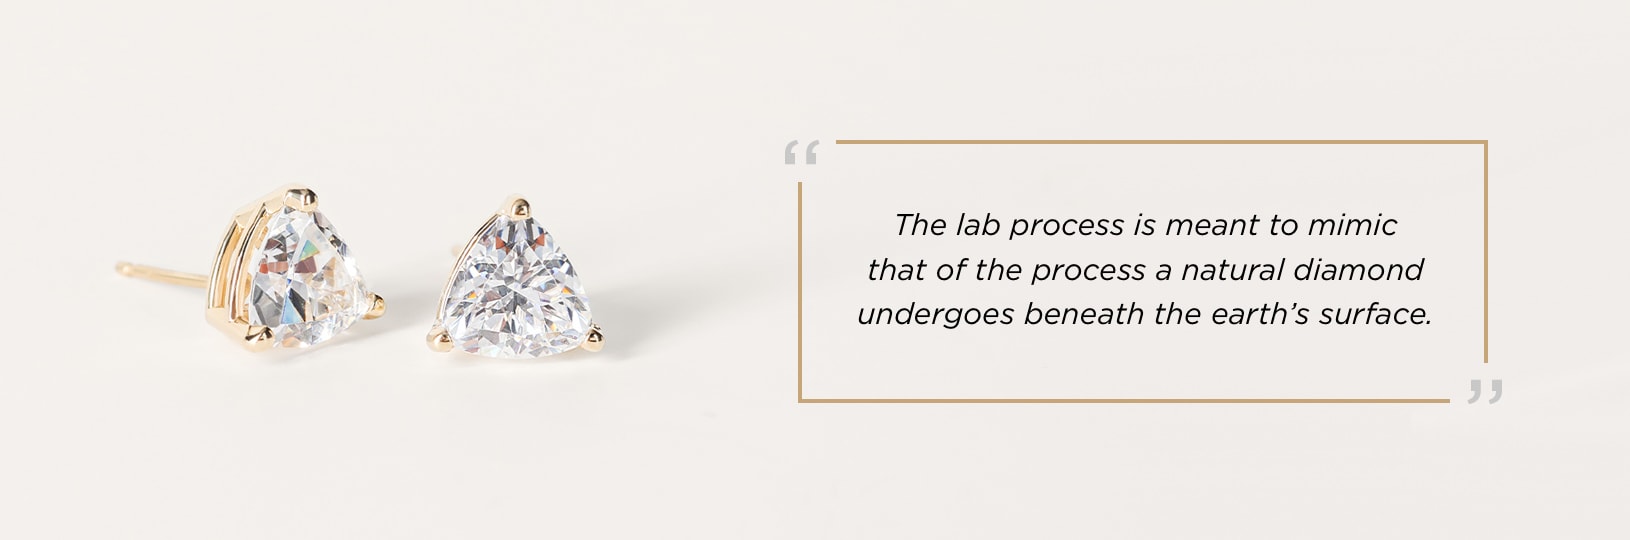 The lab process mimics the process that a natural diamond undergoes